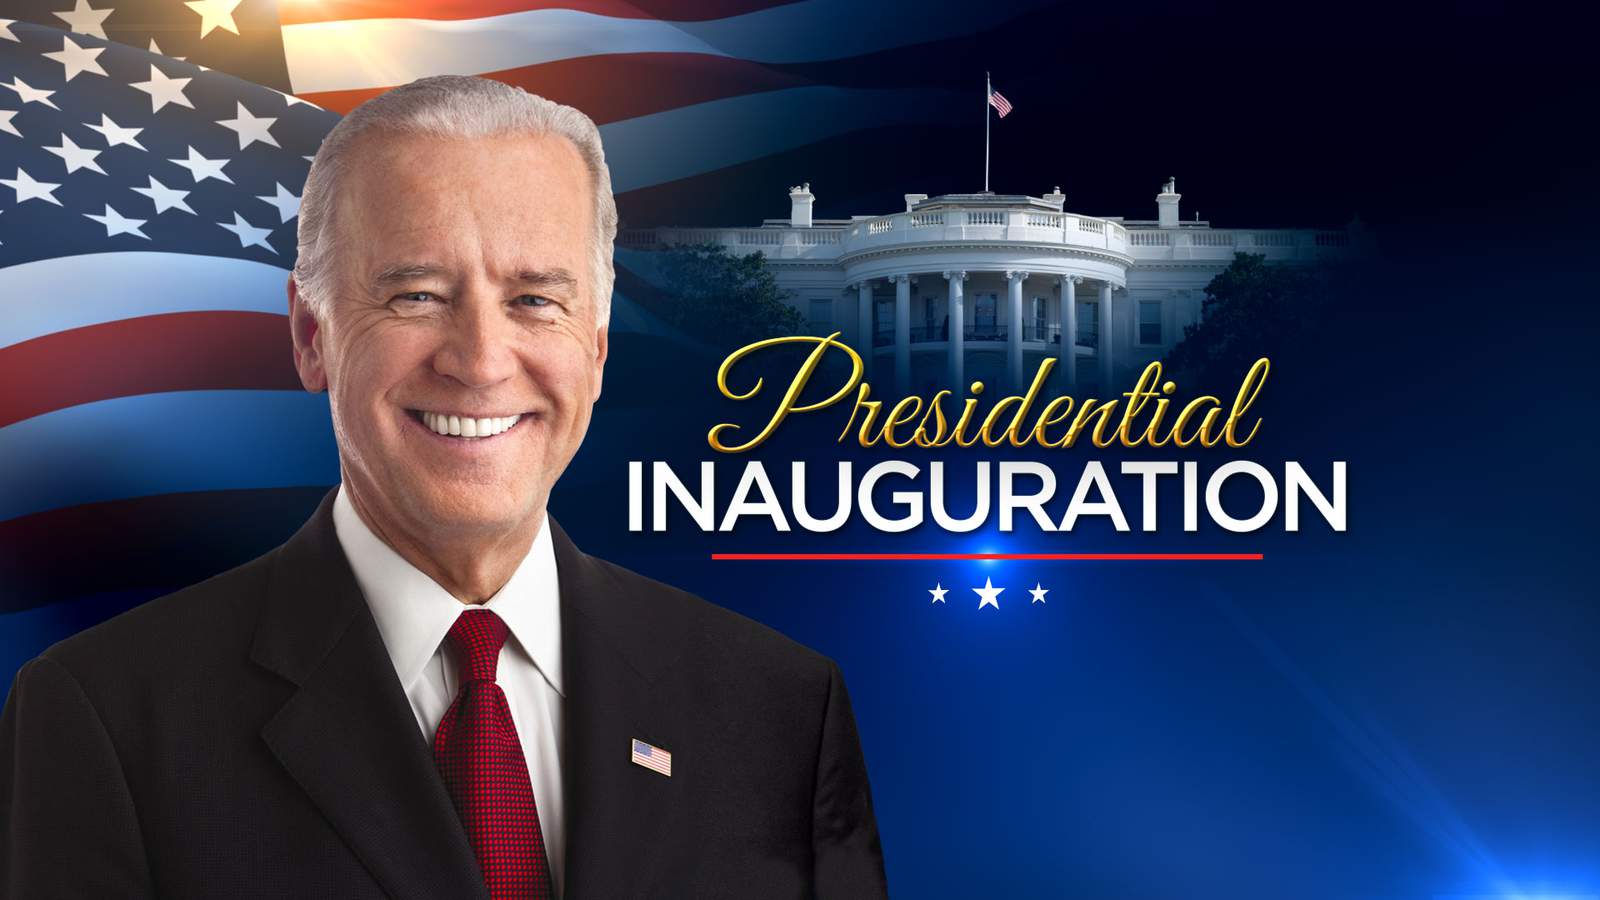 Inauguration Day 2021: Celebrating America